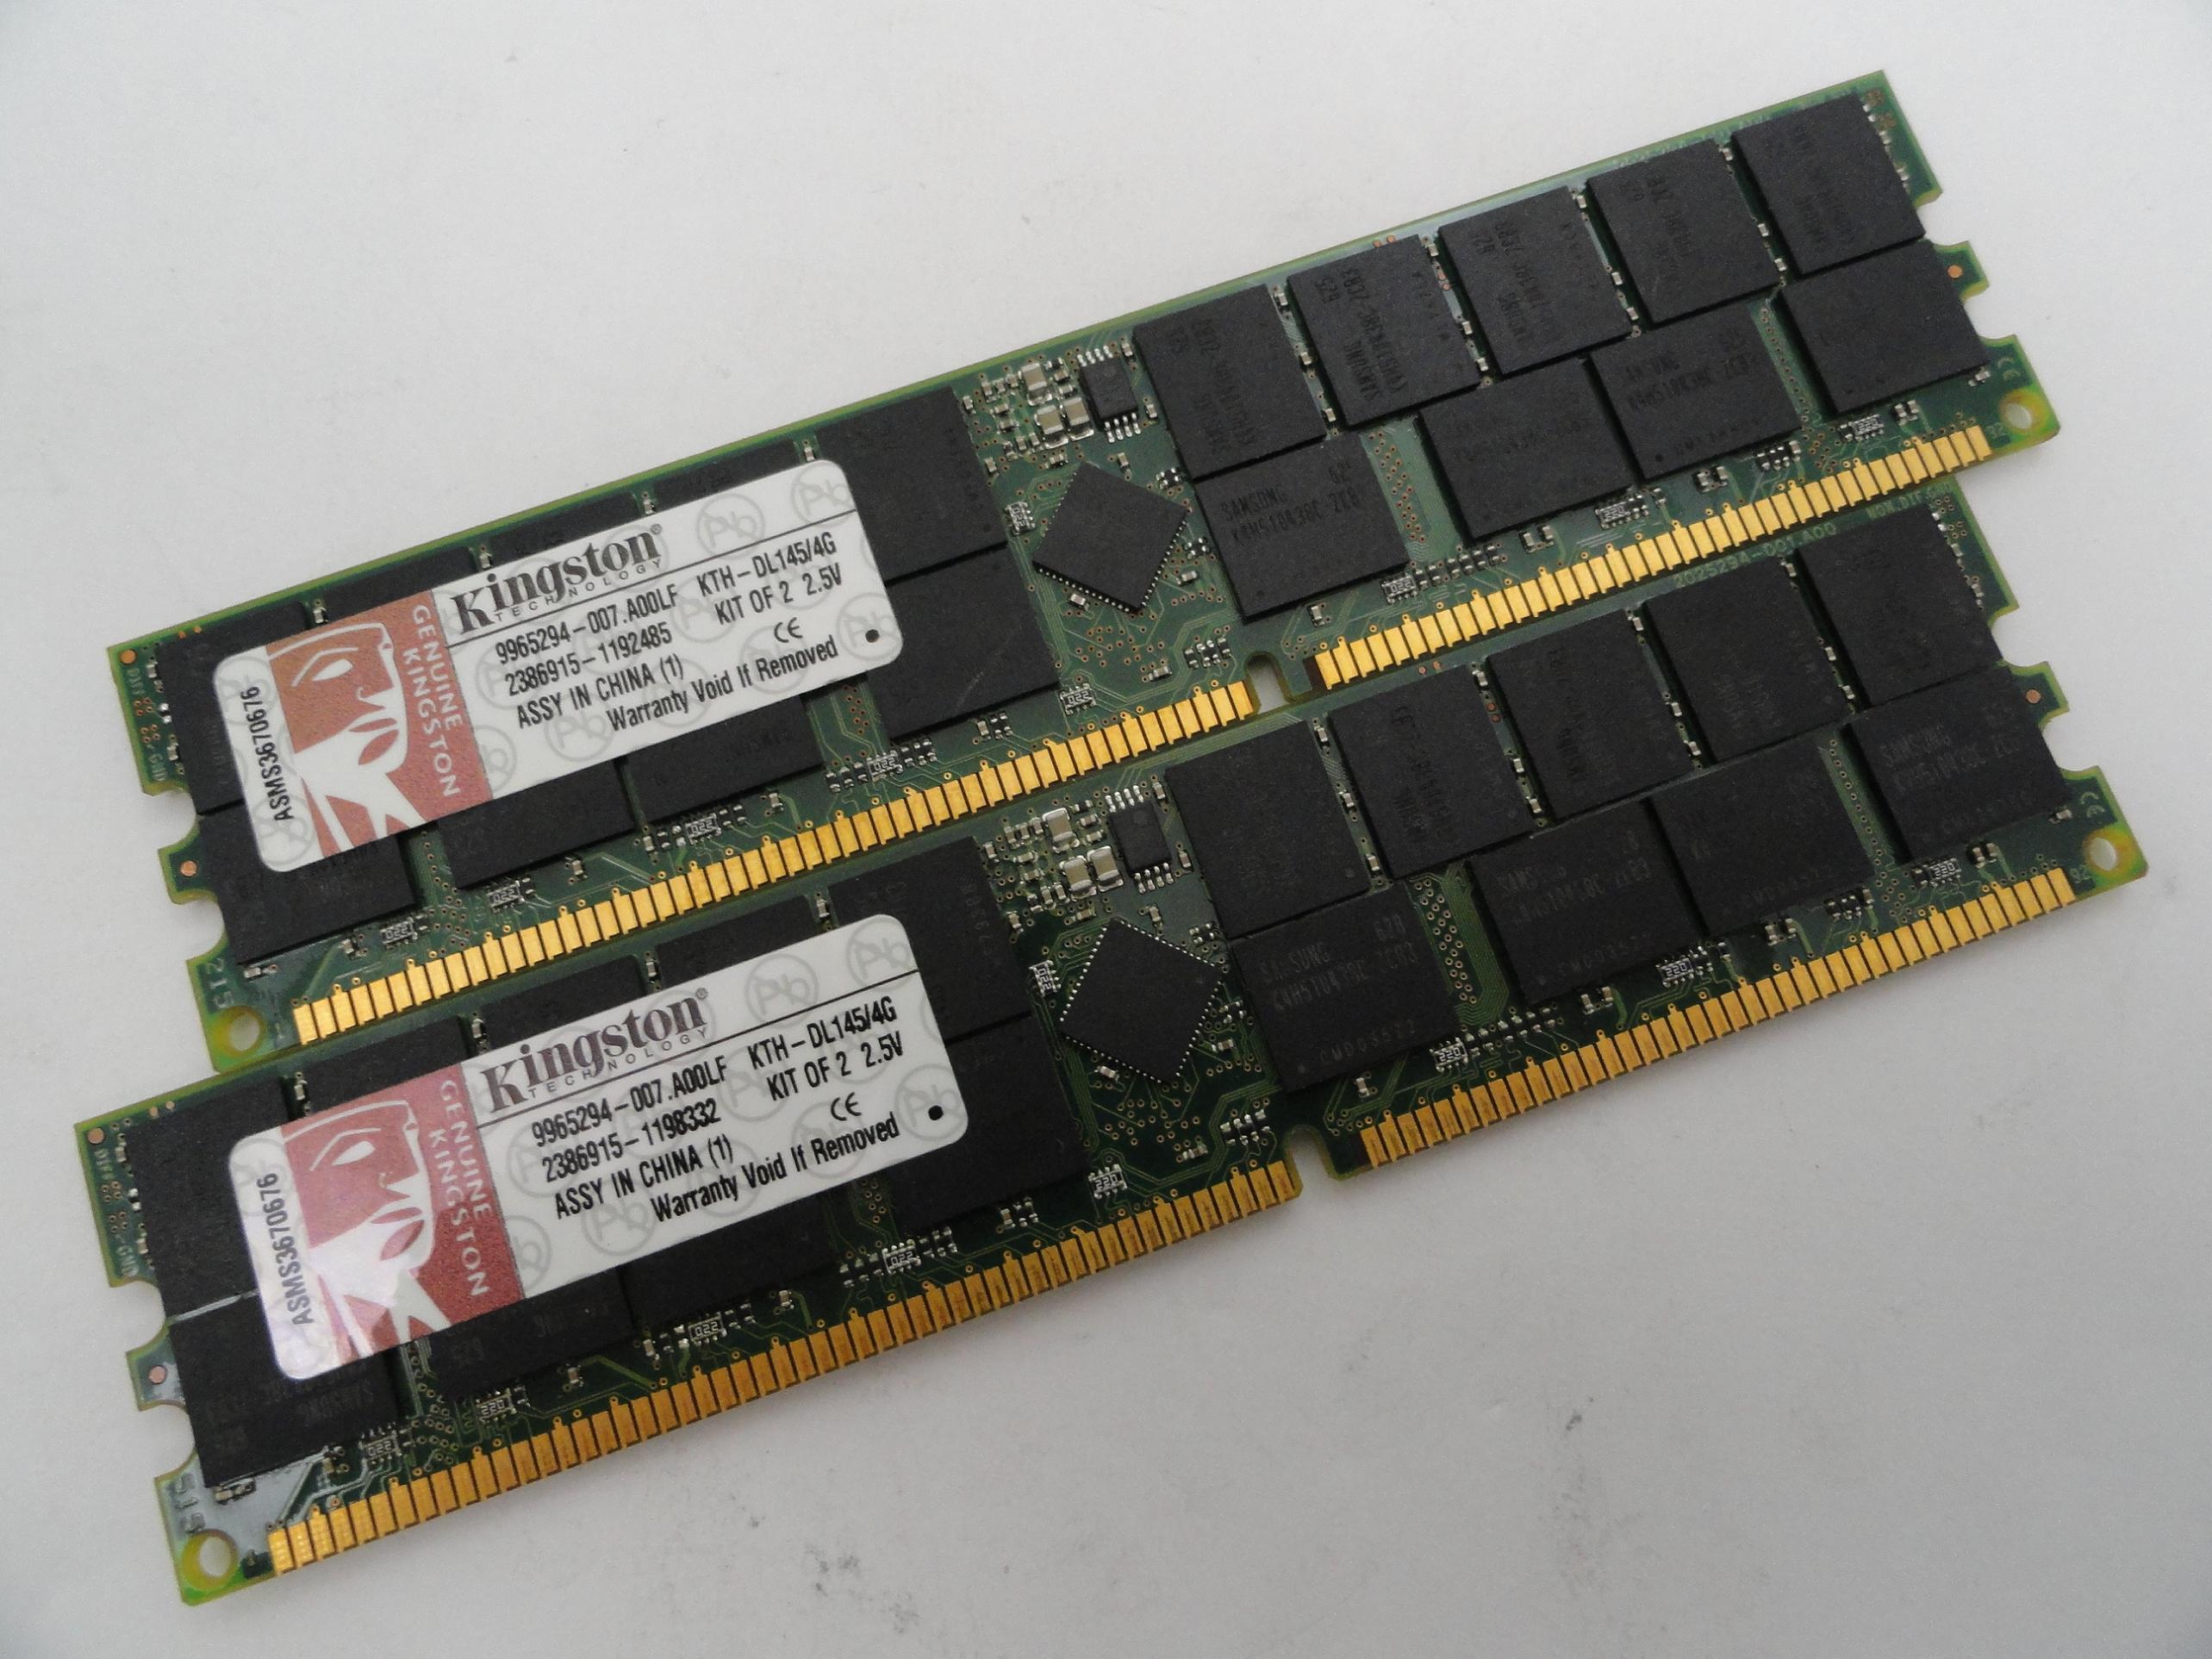 PR17303_9965294-007.A00LF_Kingston 4Gb (2X 2Gb) DDR-400 ECC Reg RAM Kit - Image2